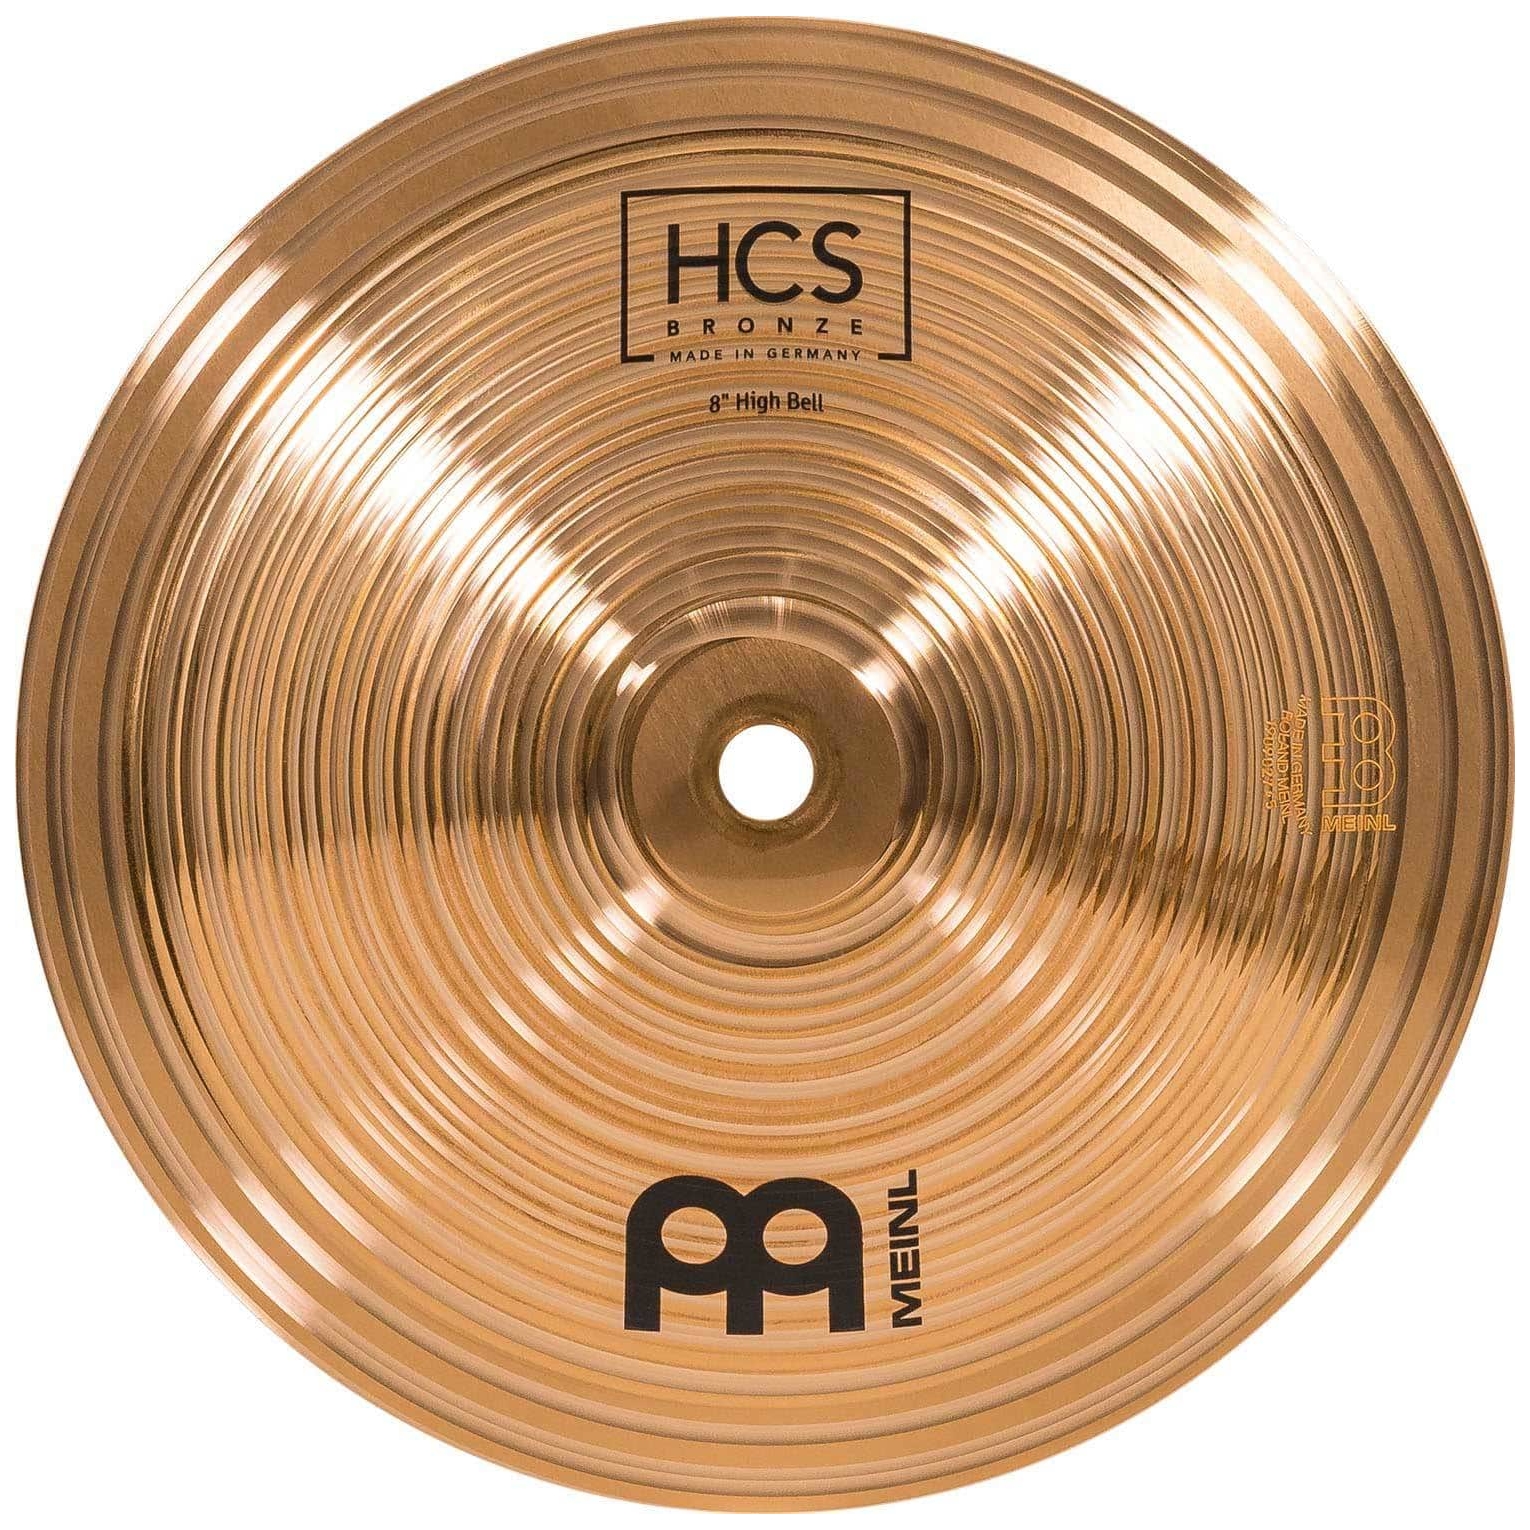 Meinl Cymbals HCSB8BH - 8" HCS Bronze High Bell 